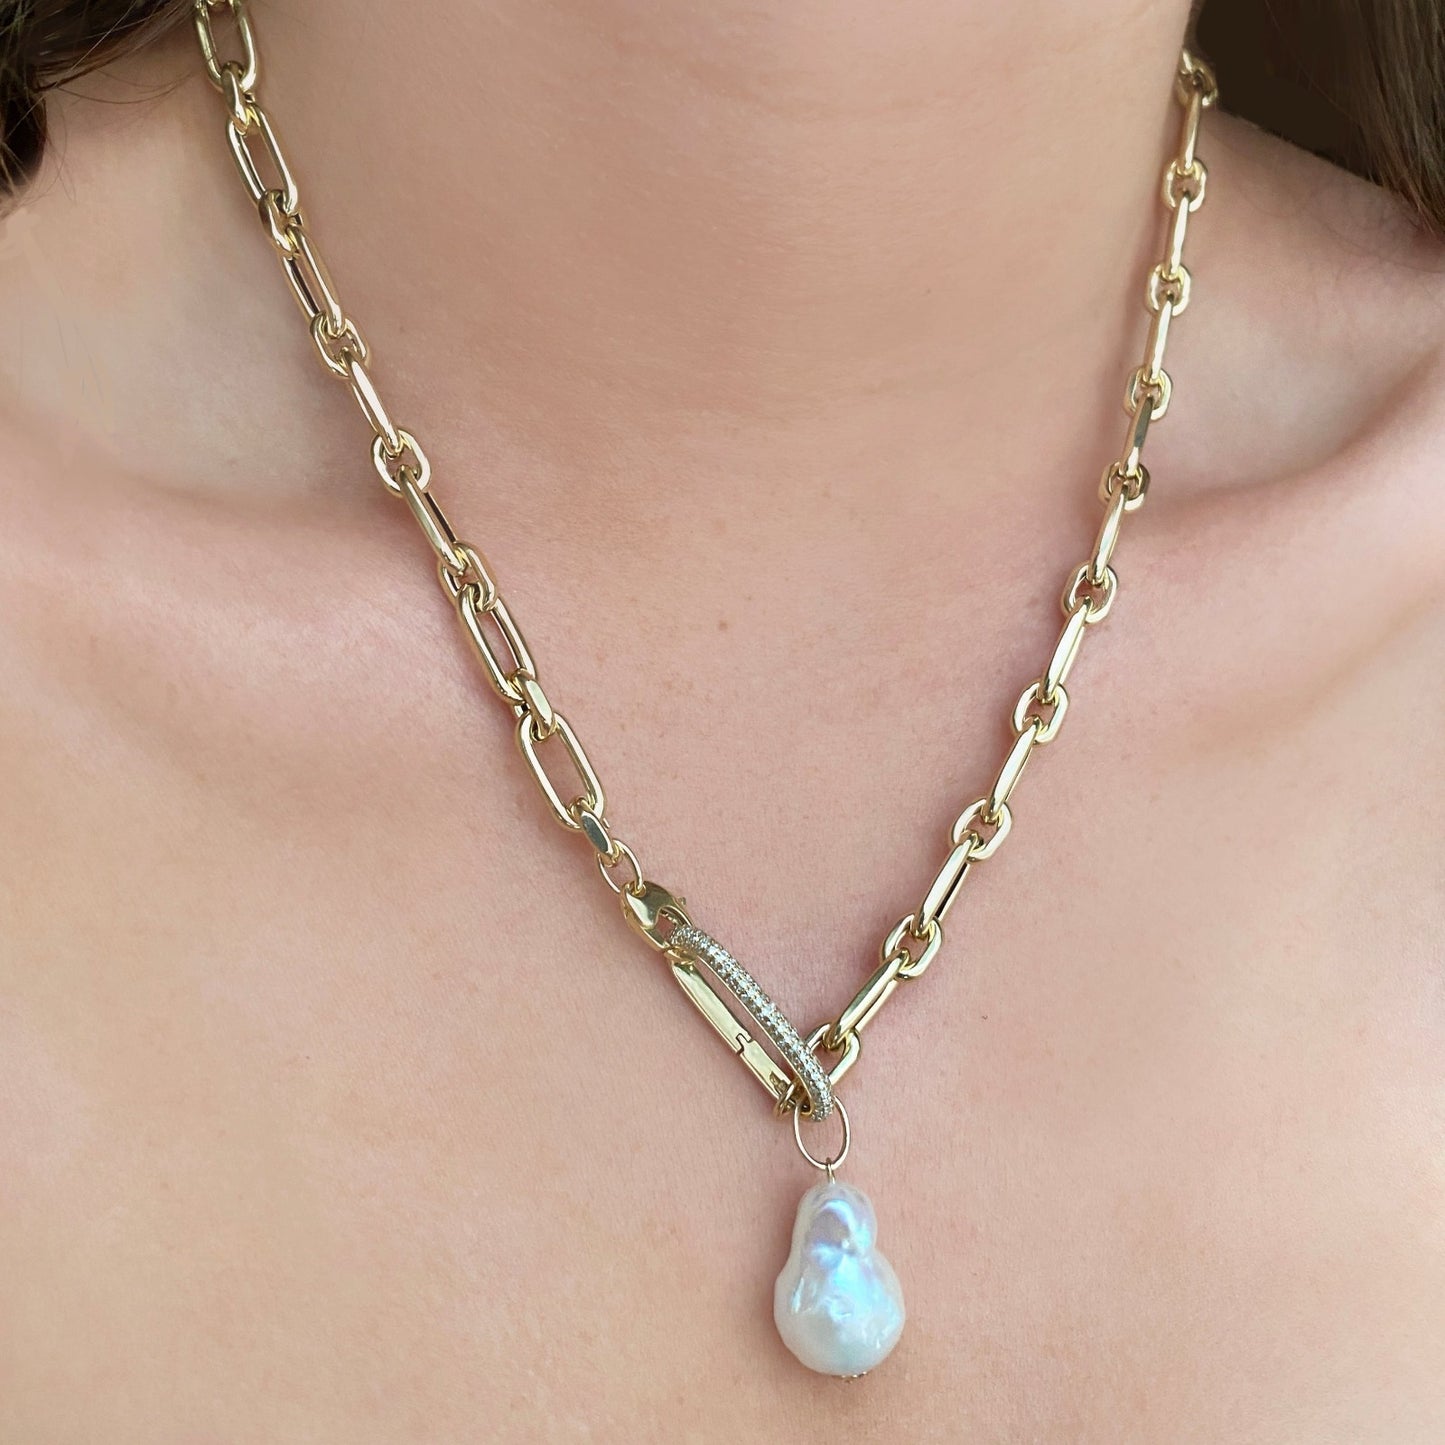 Diamond Cut Link Chain Necklace